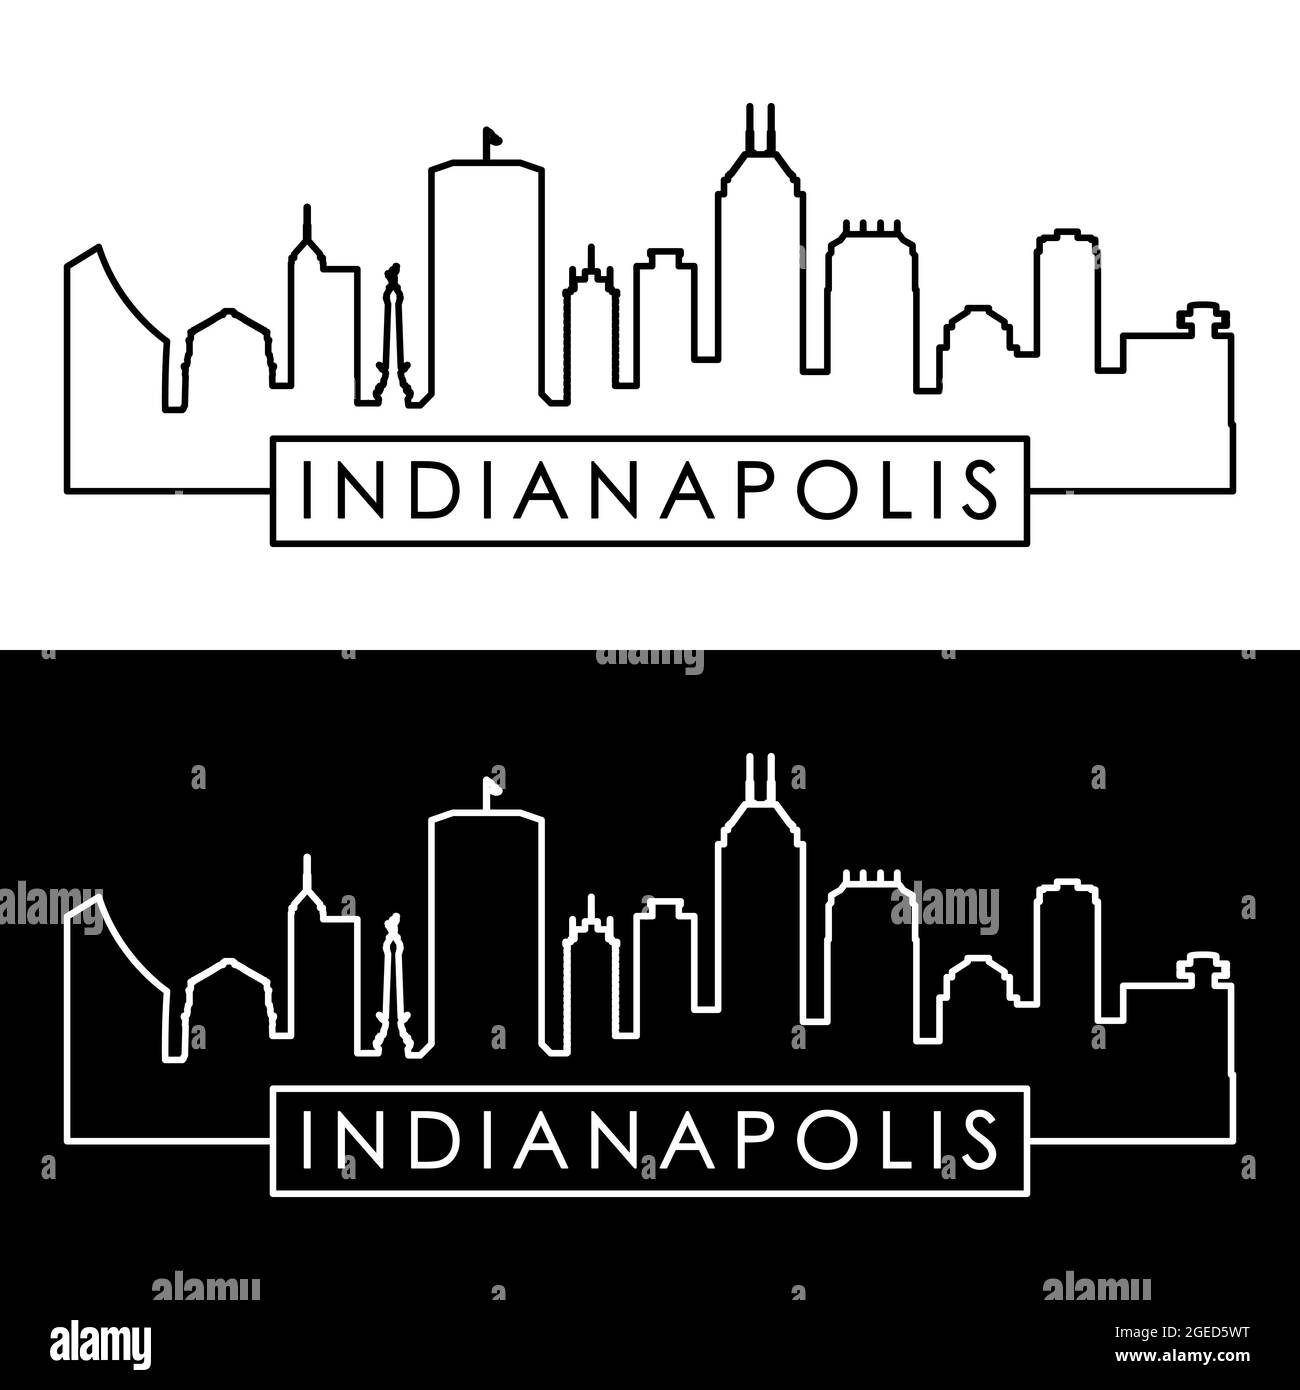 Indianapolis skyline Black and White Stock Photos & Images - Alamy